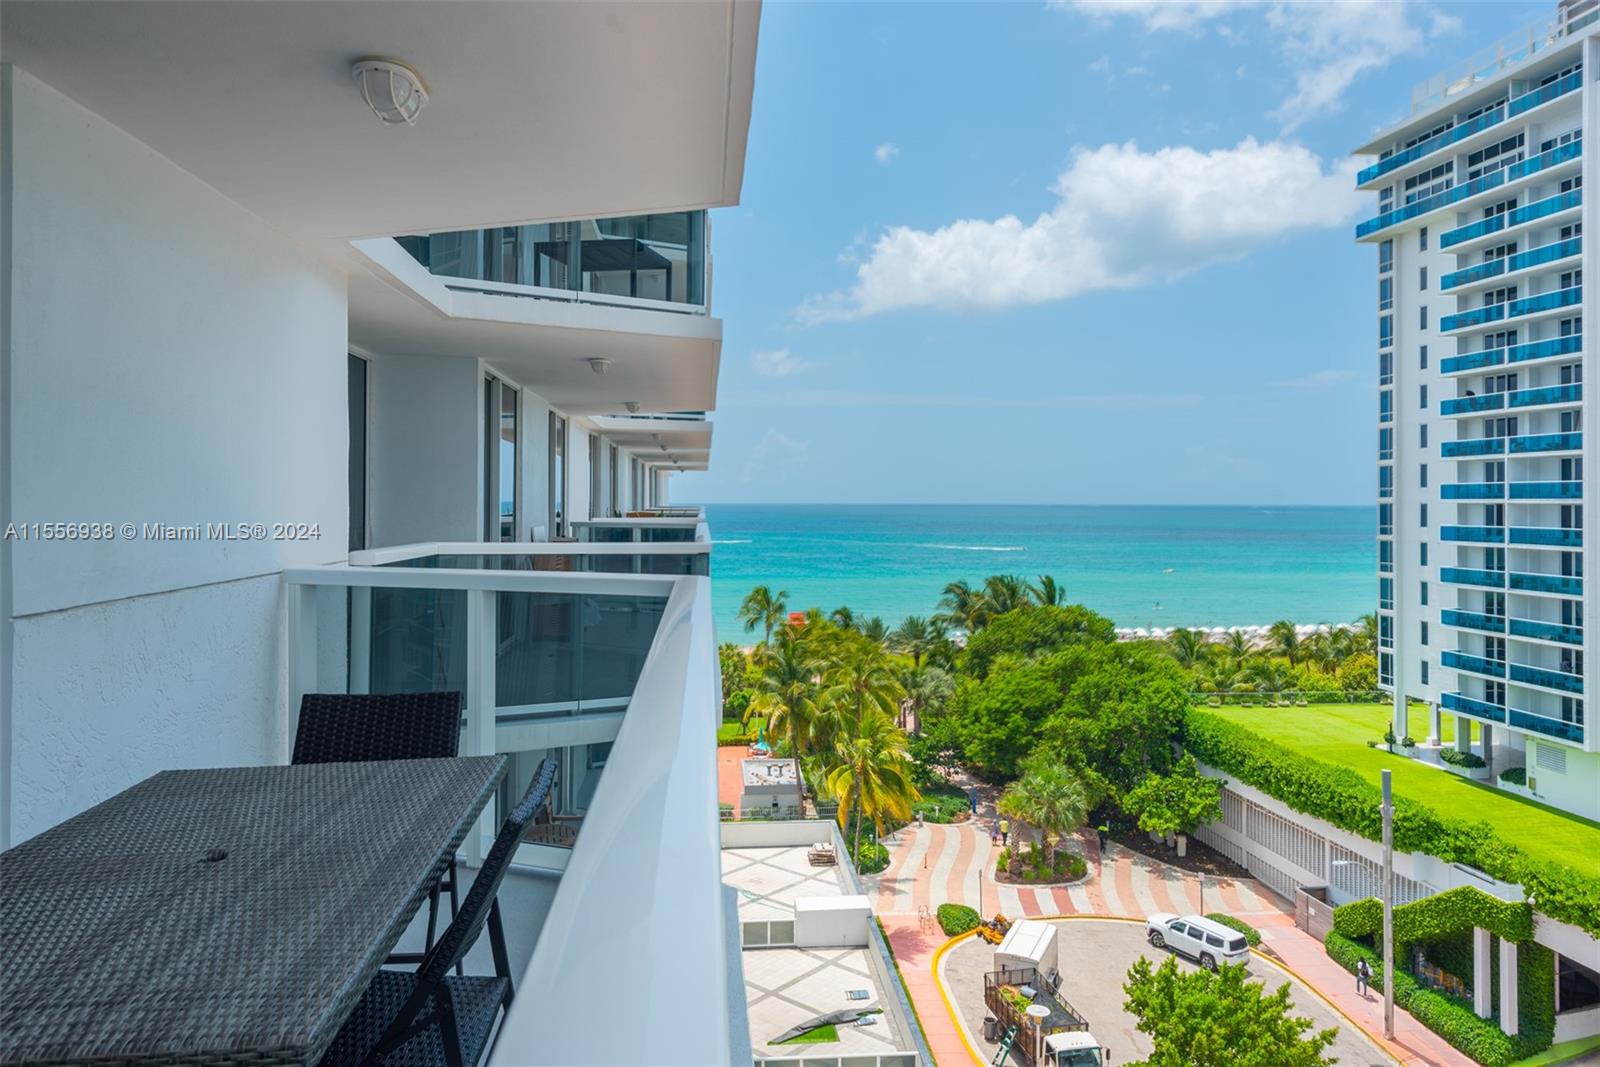 Rental Property at 2401 Collins Ave 1007, Miami Beach, Miami-Dade County, Florida - Bedrooms: 2 
Bathrooms: 2  - $5,000 MO.